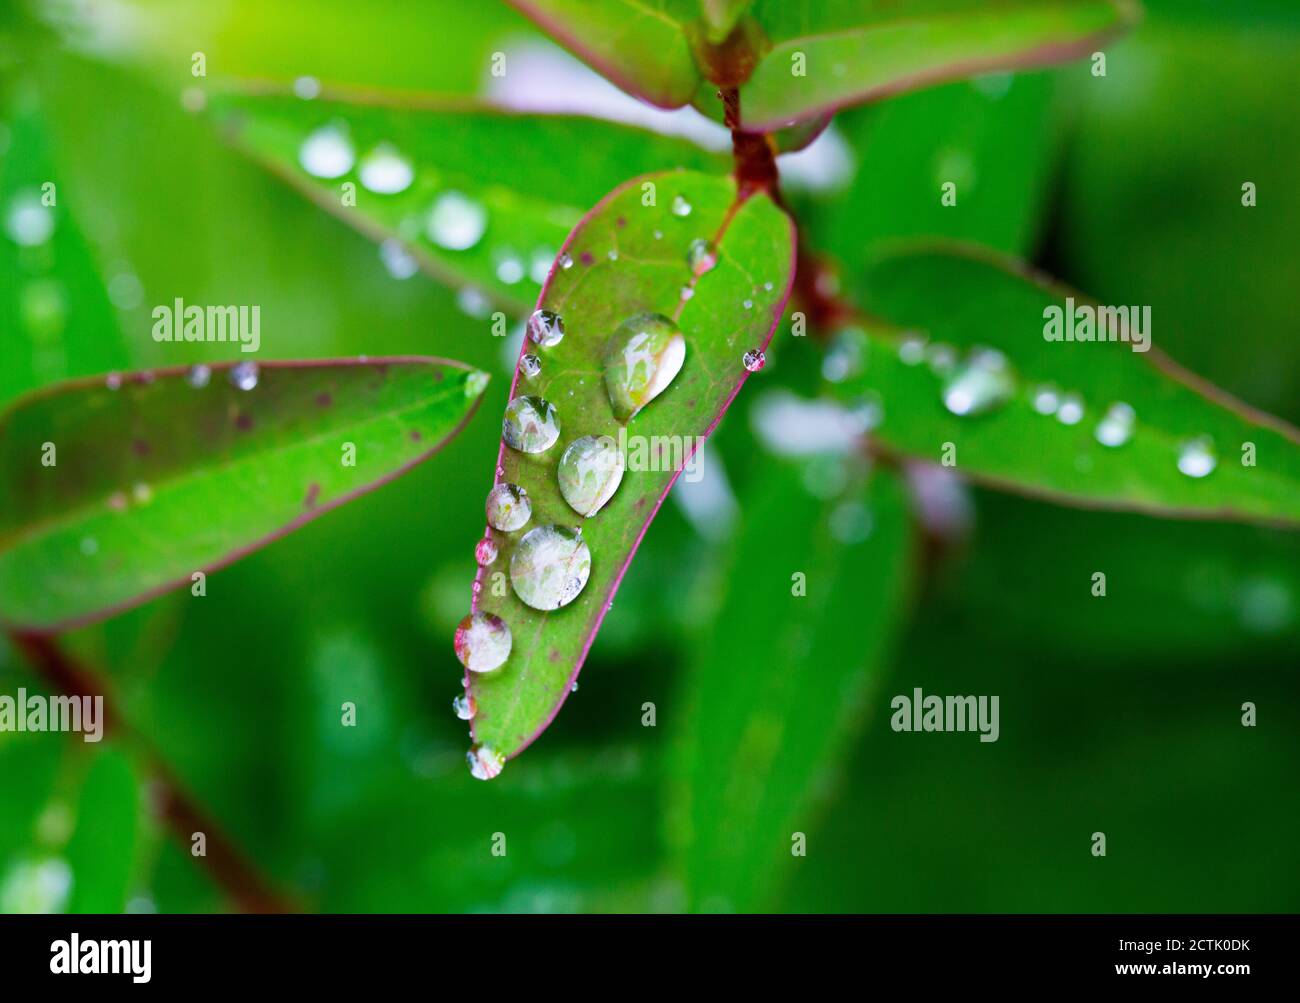 Raindrops on green leaf of Saint Johns wort (Hypericum perforatum) Stock Photo